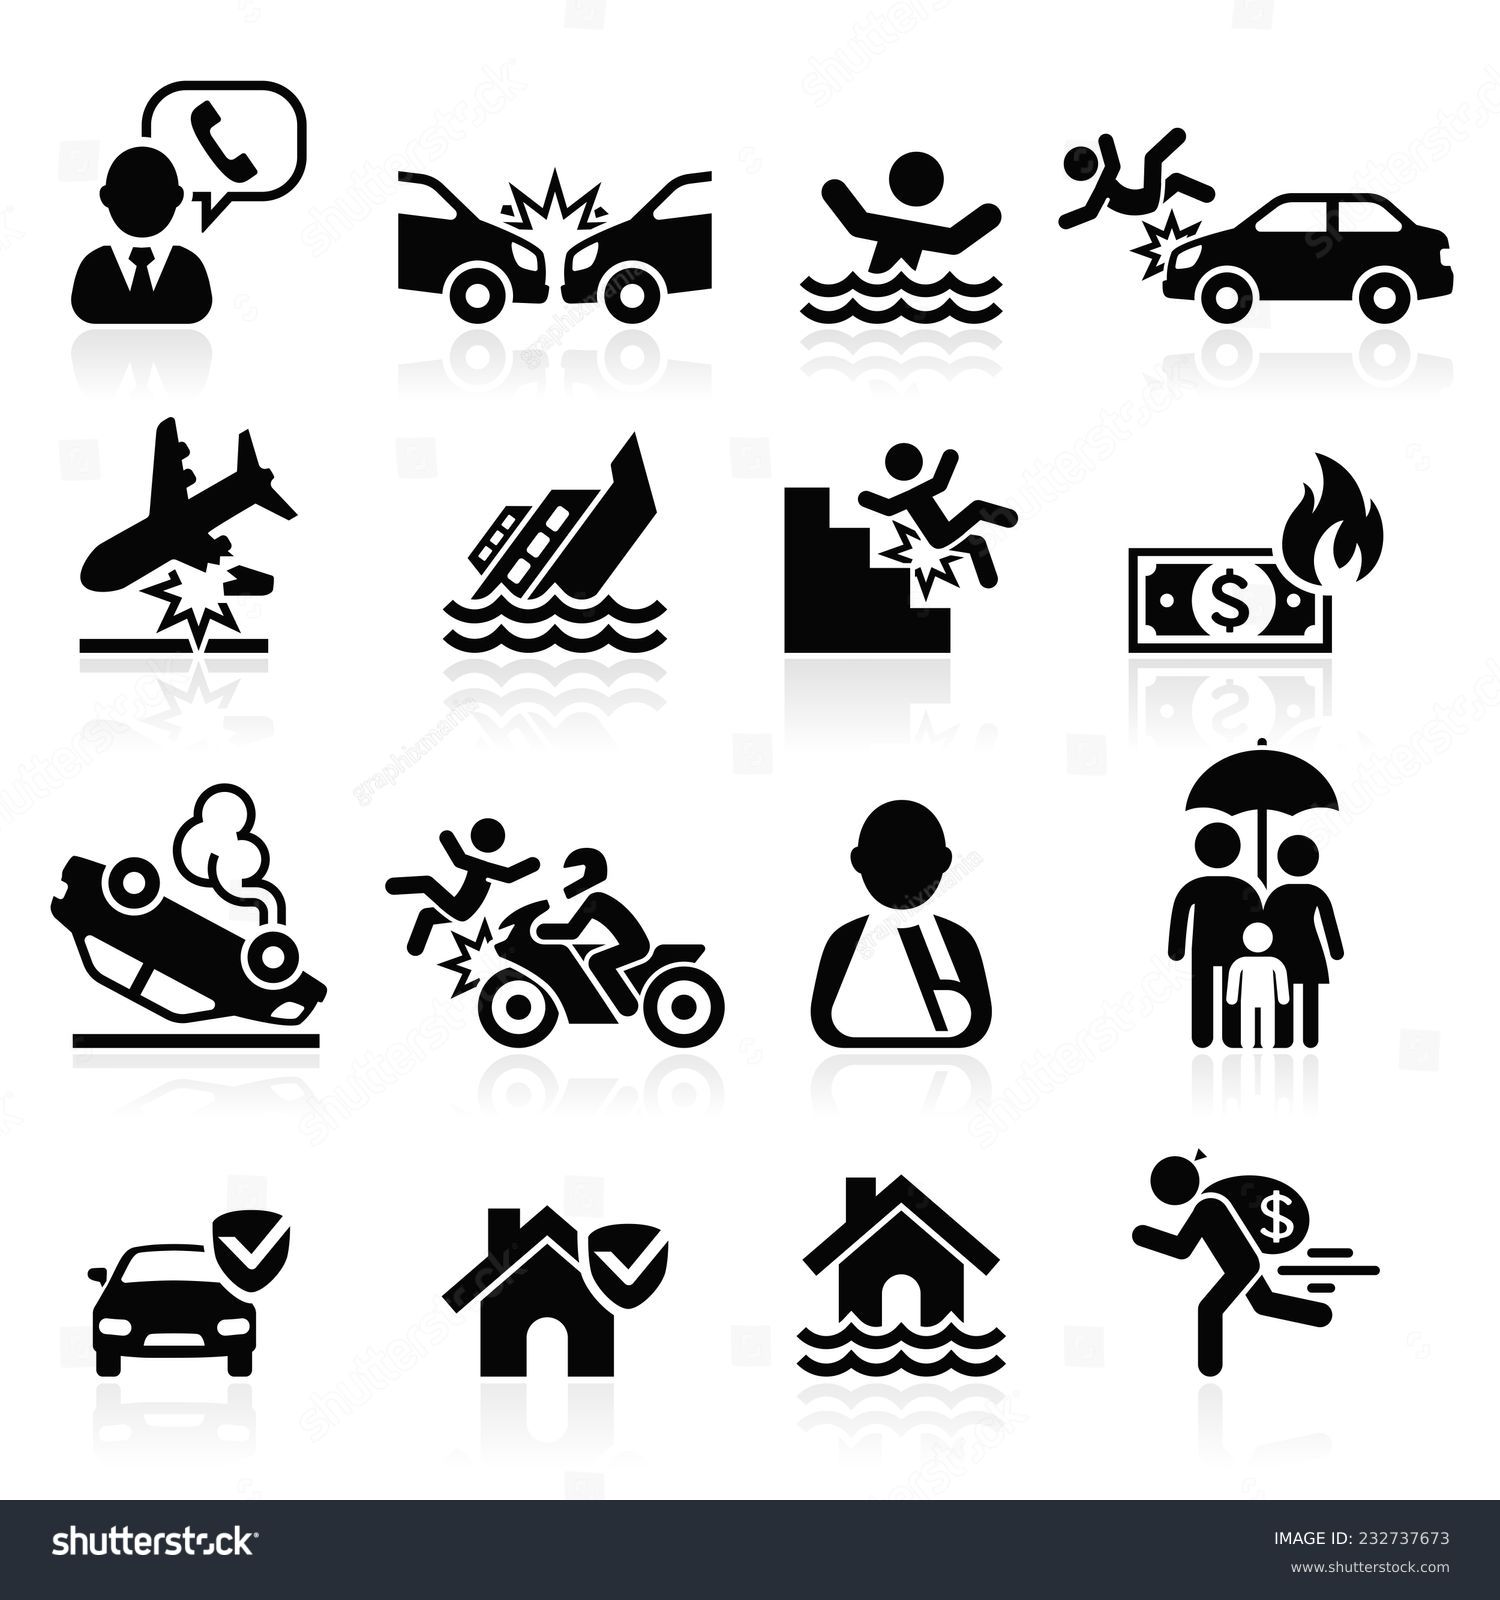 Insurance icons set. Vector Illustration. #232737673